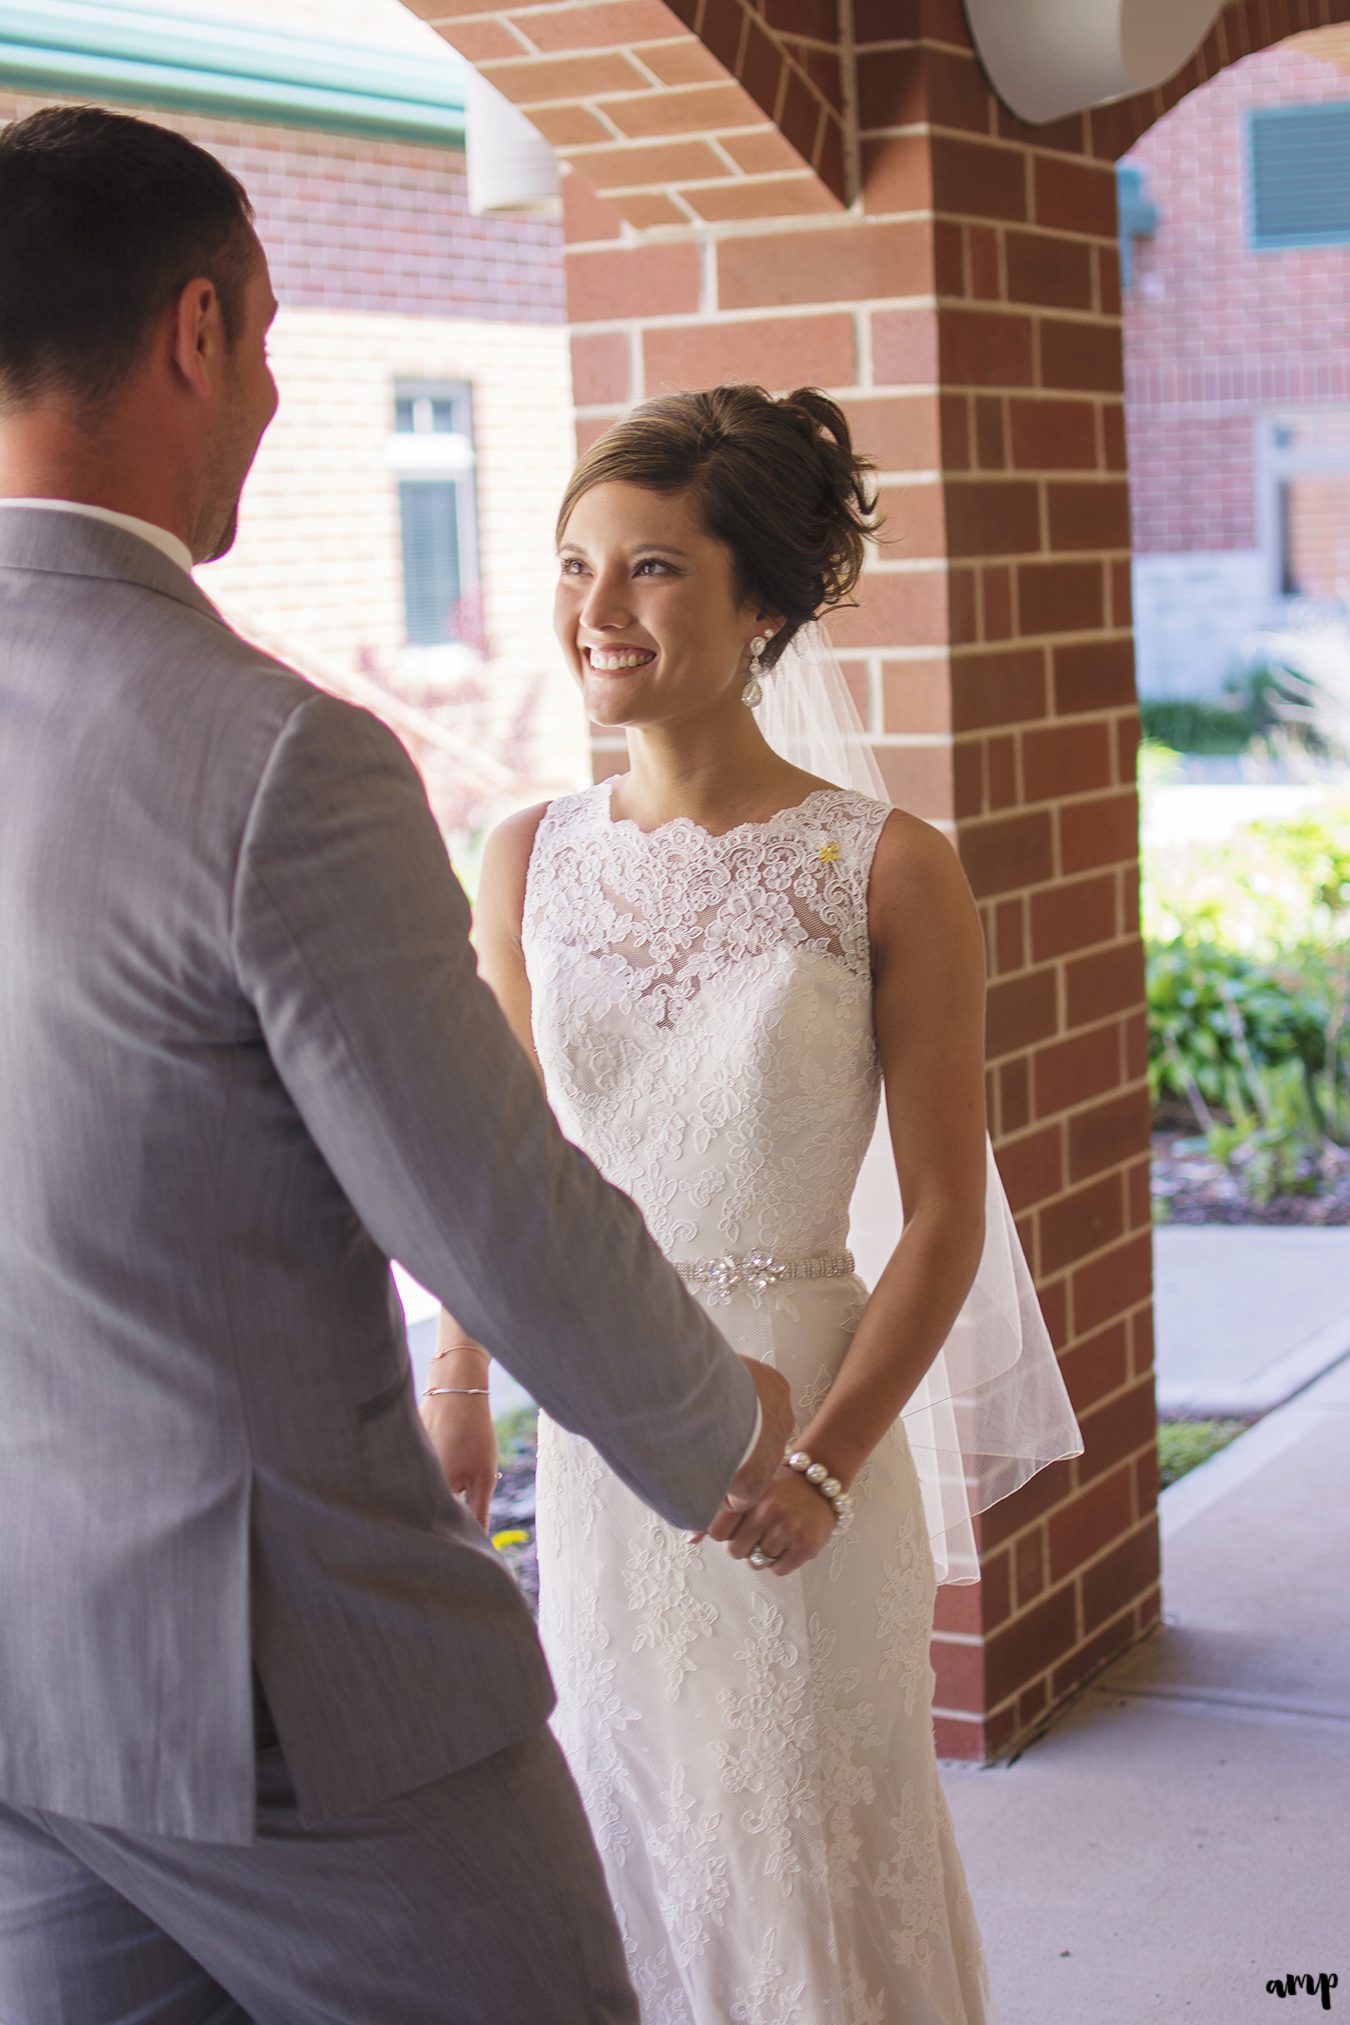 Bride & groom's first look in church courtyard